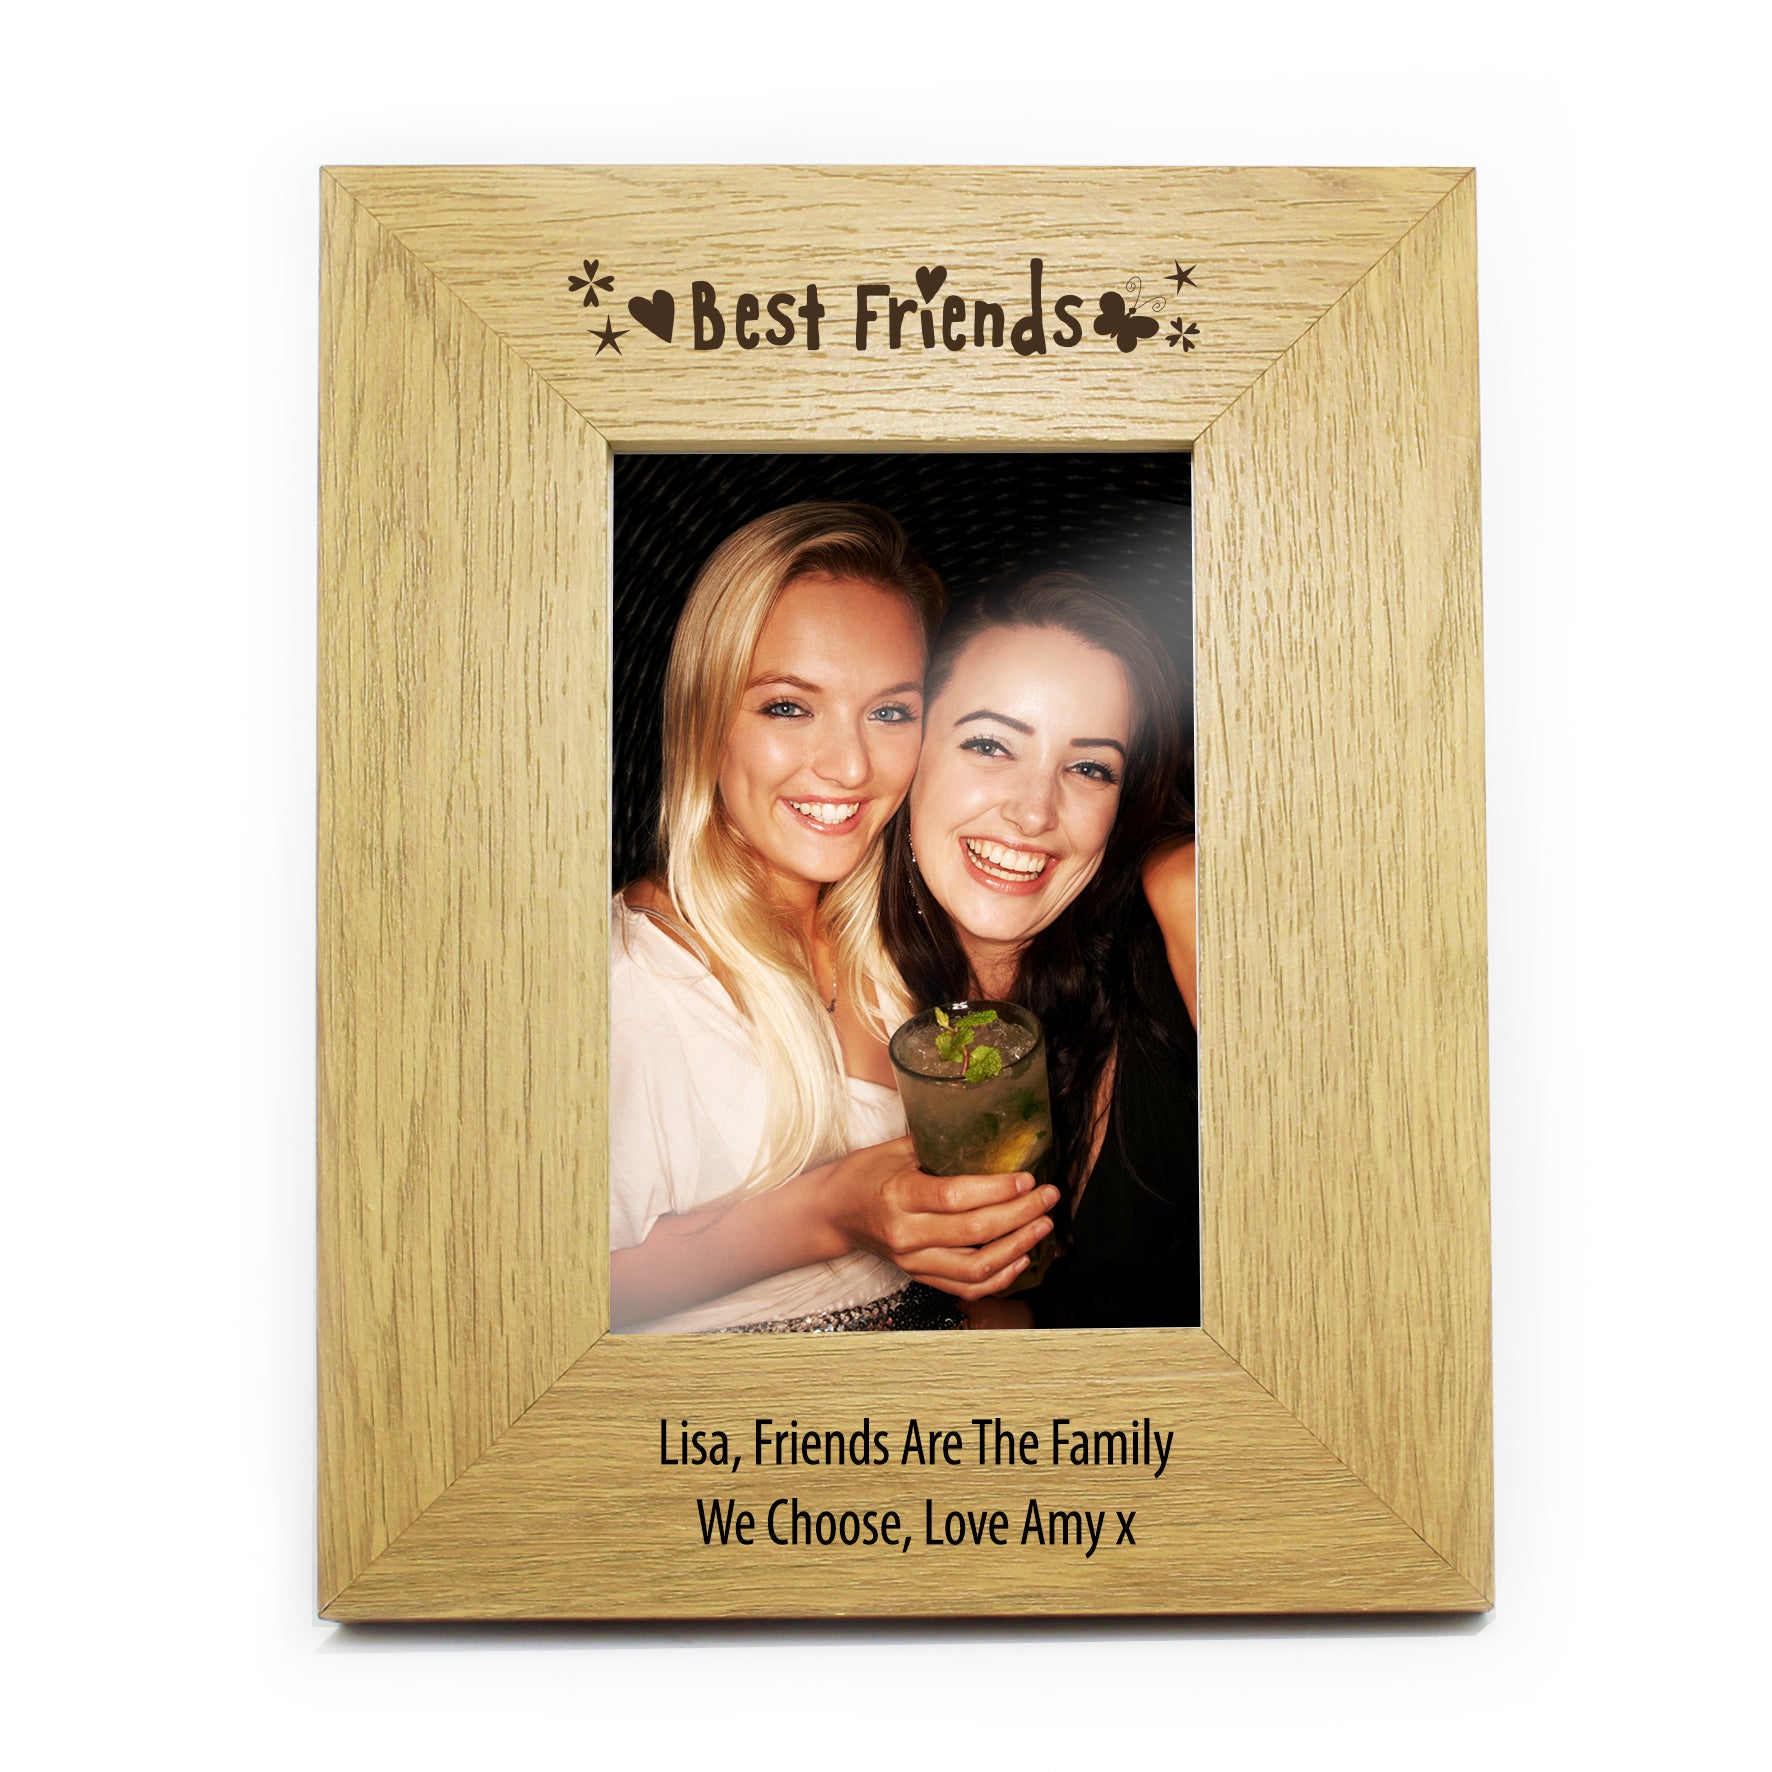 Personalised Oak Finish 6x4 Best Friends Photo Frame